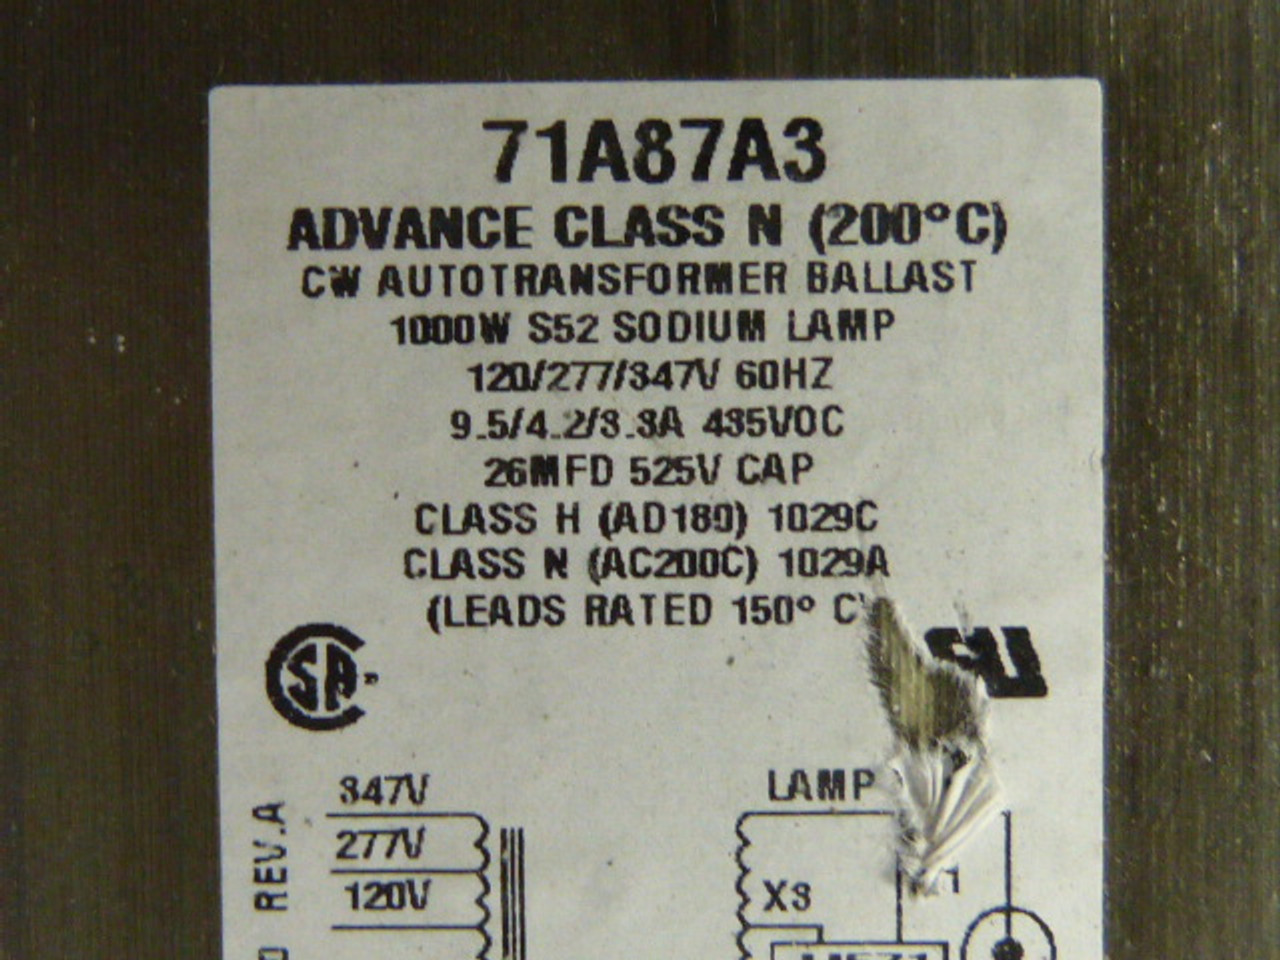 Advance 71A87A3 Ballast Kit 1000W 120/277/347V 26MFD USED